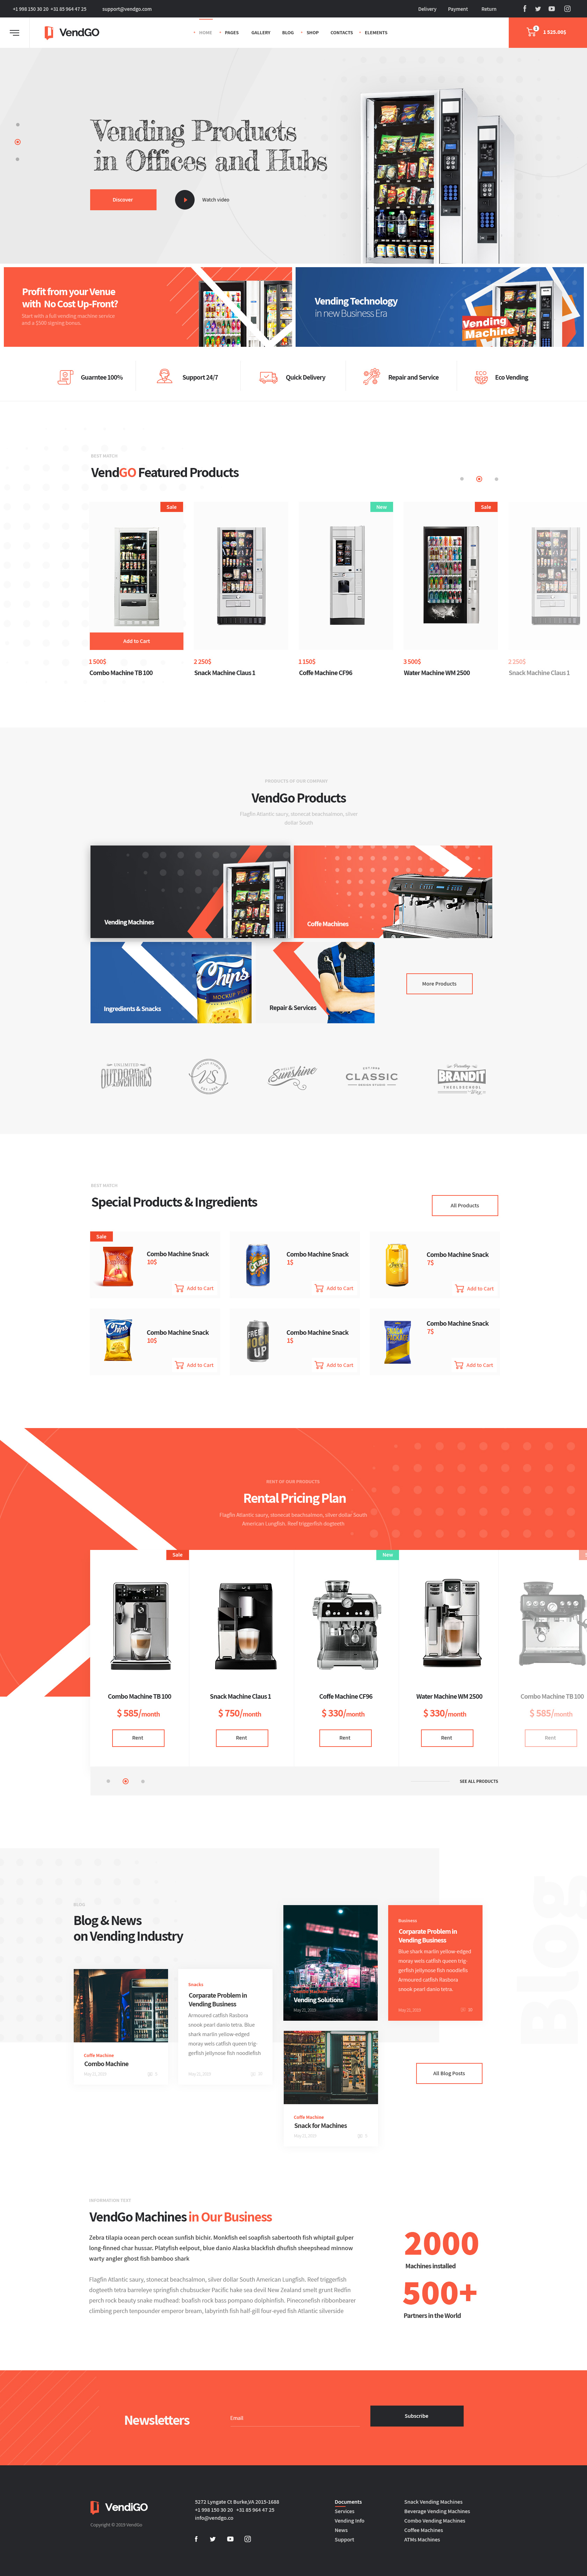 vendgo-vending-machines-snack-html-template-pack-by-artureanec